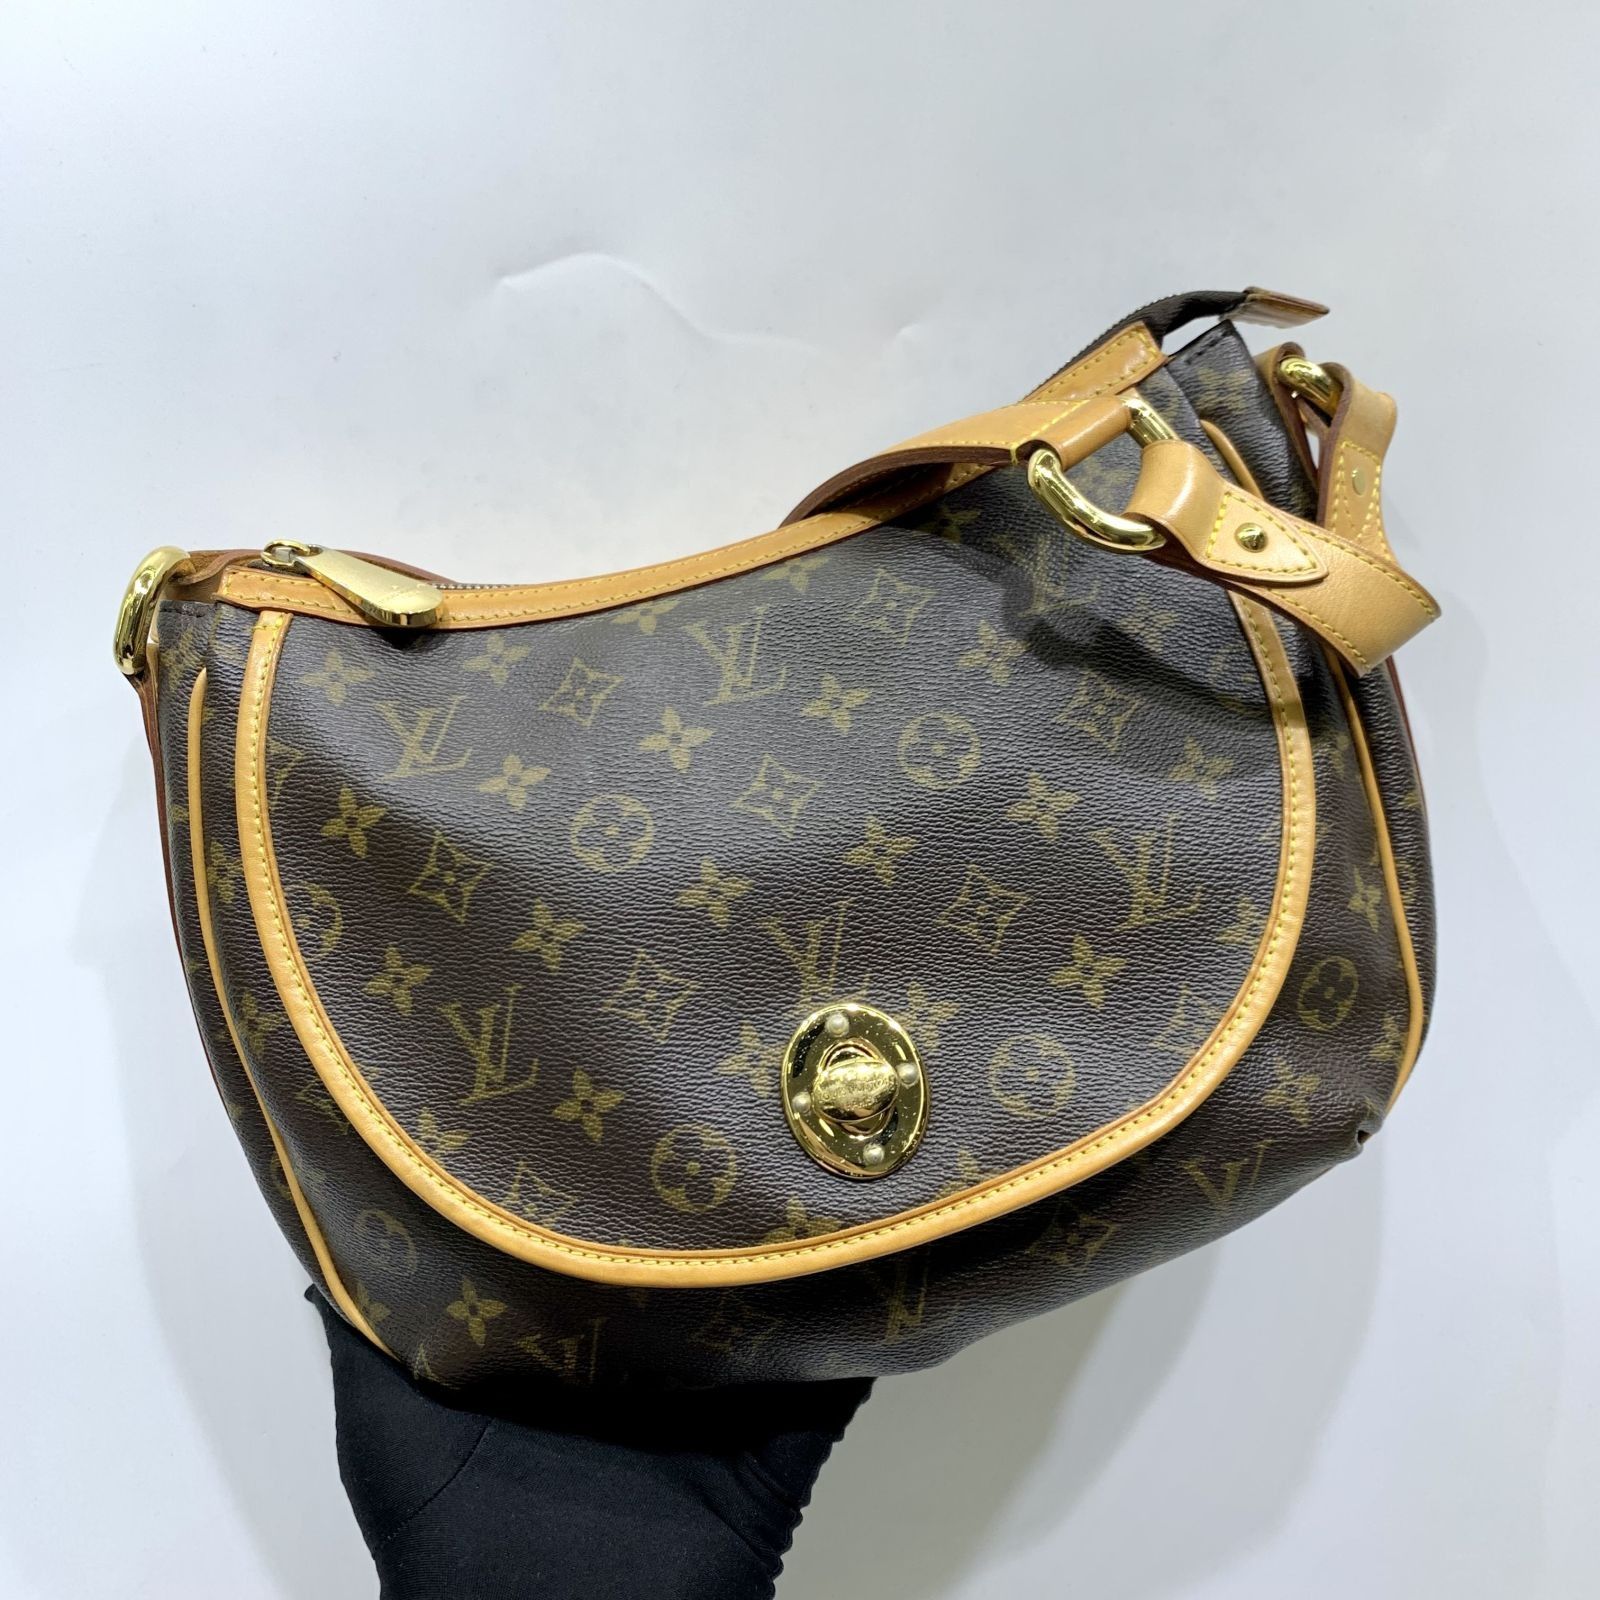 Tulum leather crossbody bag Louis Vuitton Multicolour in Leather